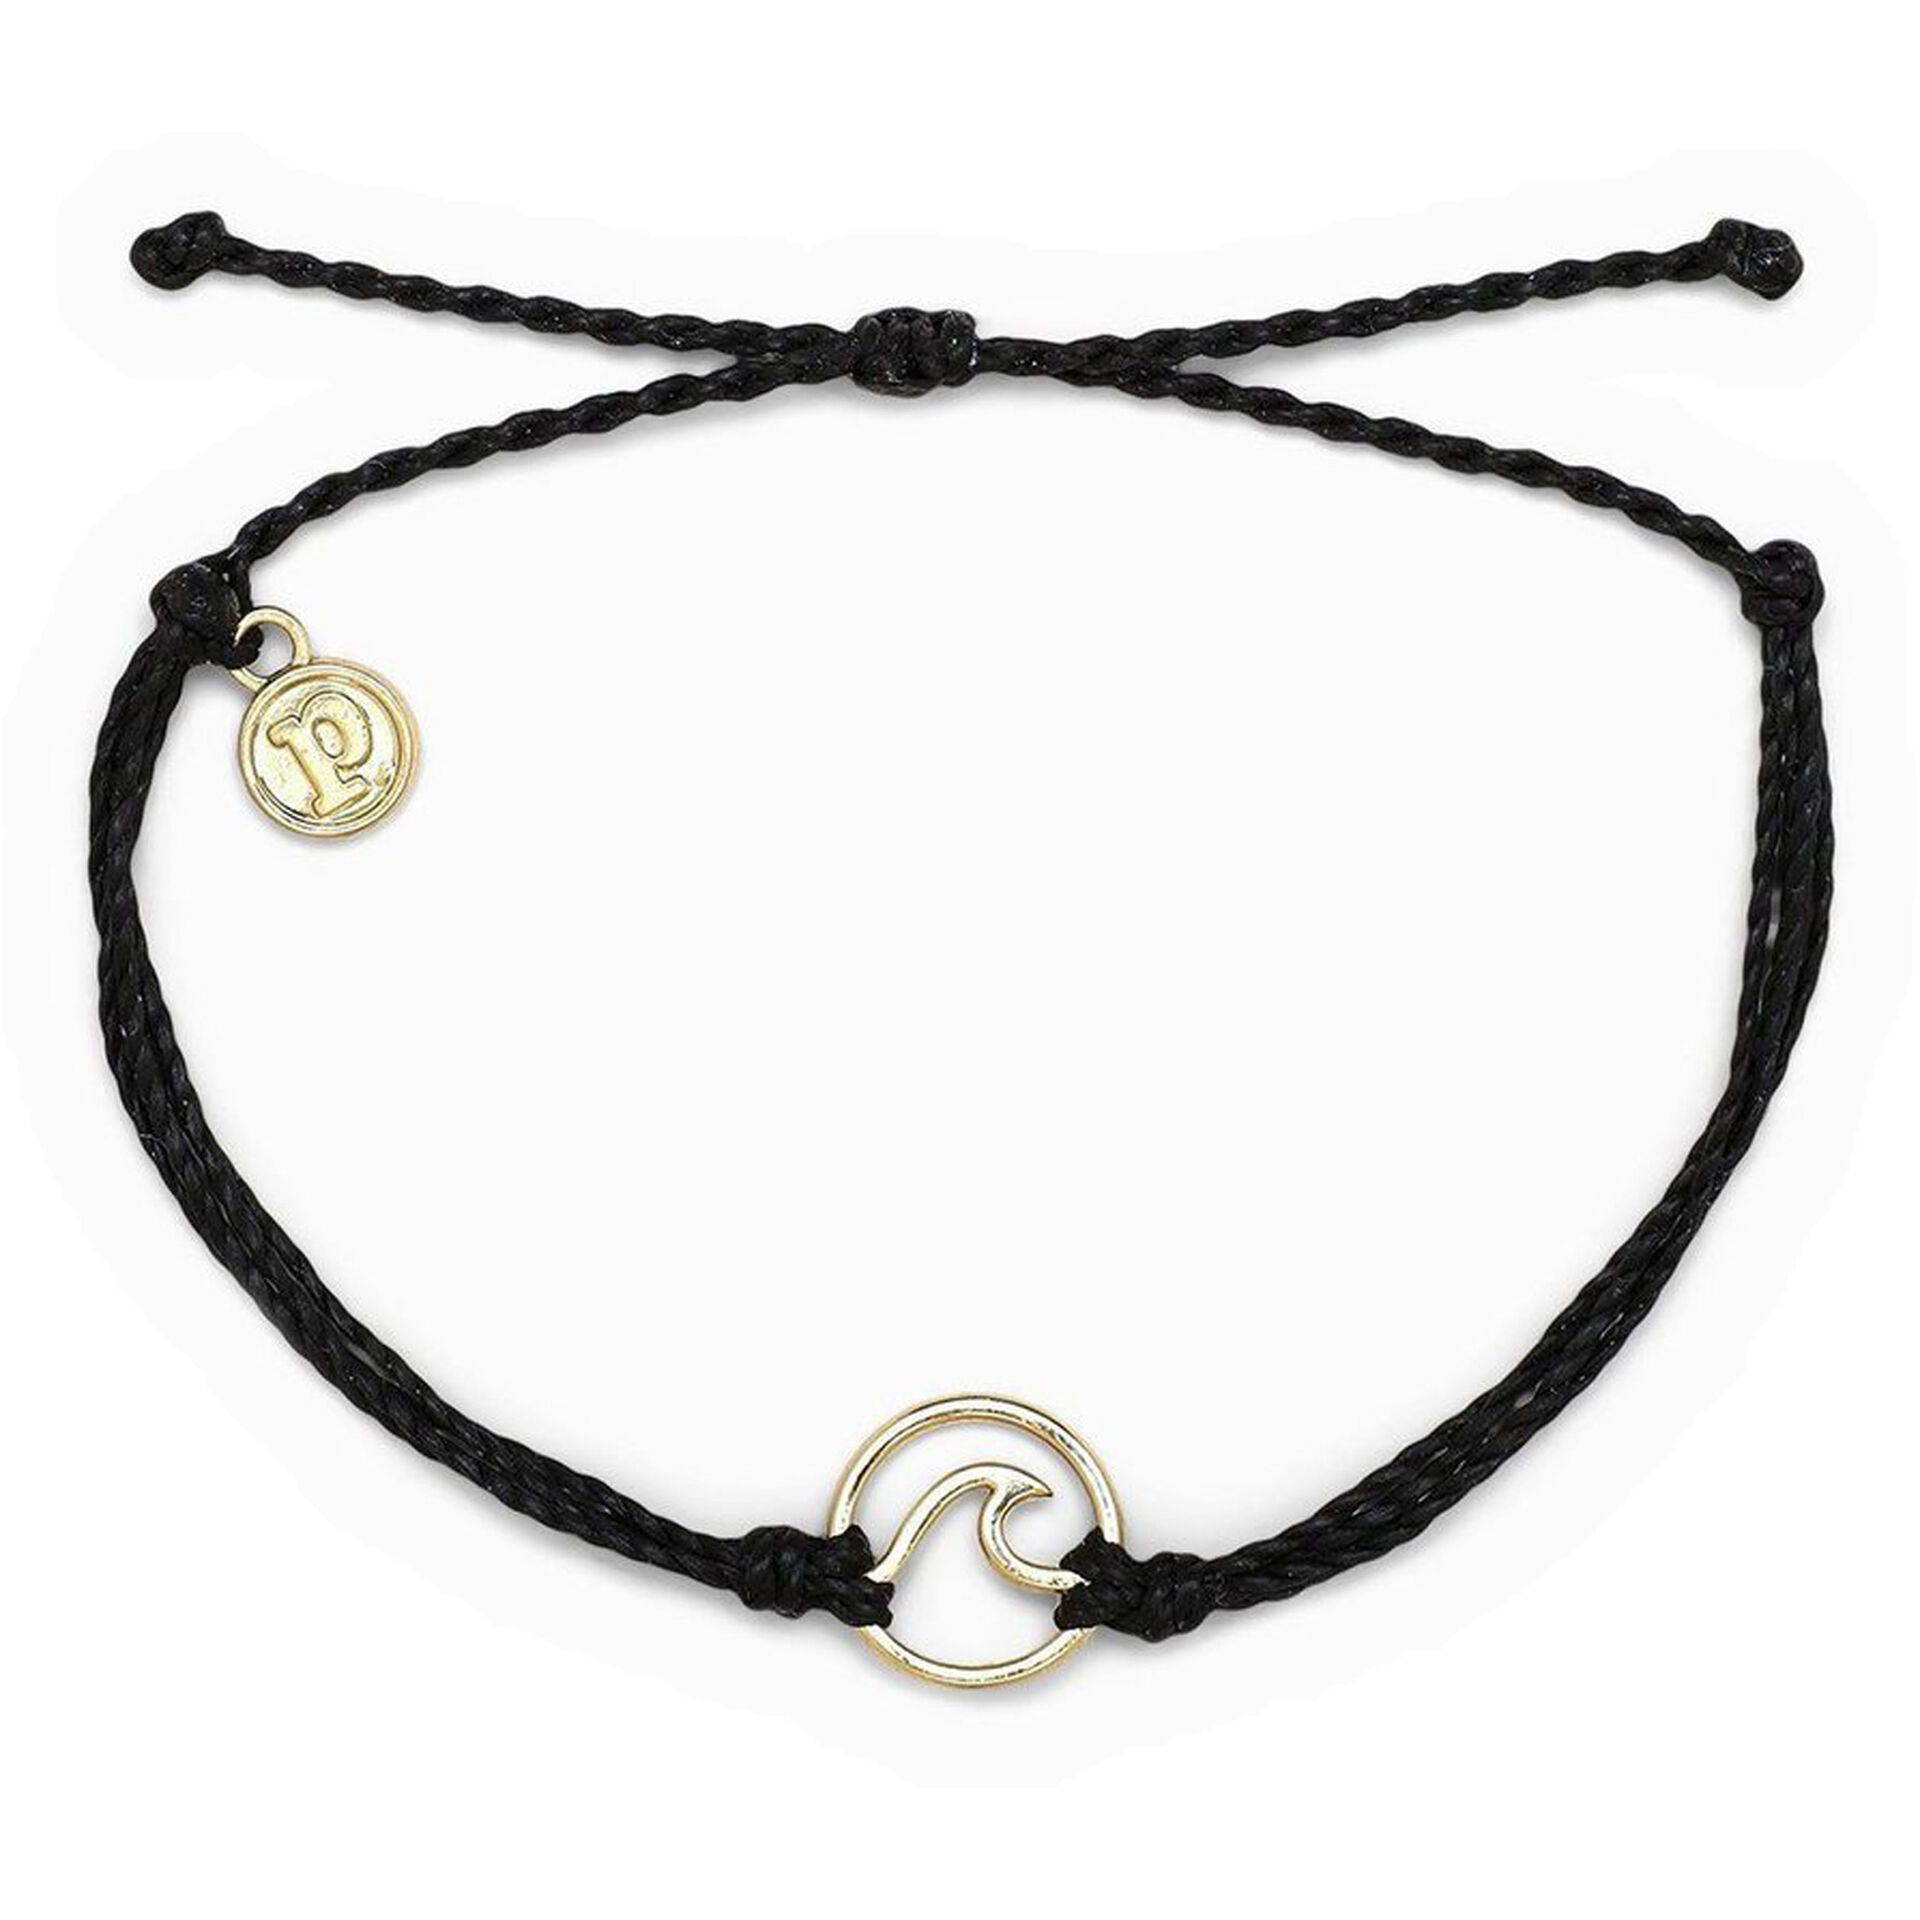 Pura Vida Black With Gold Wave Charm Bracelet - Jewelry - Hallmark